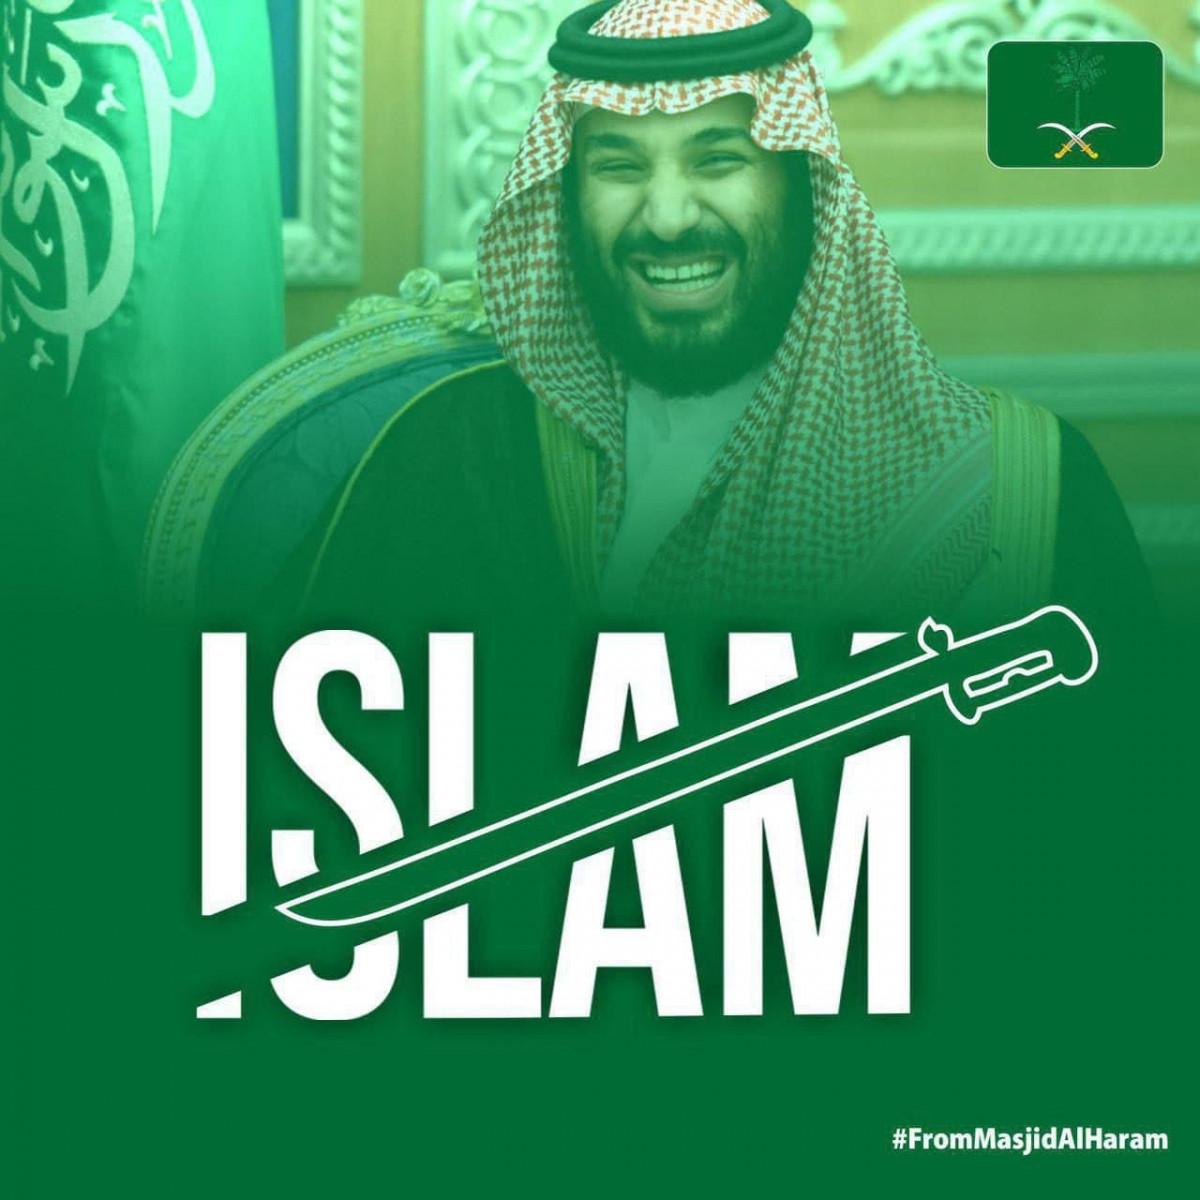 Saudi Arabia's attempt to destroy Islam